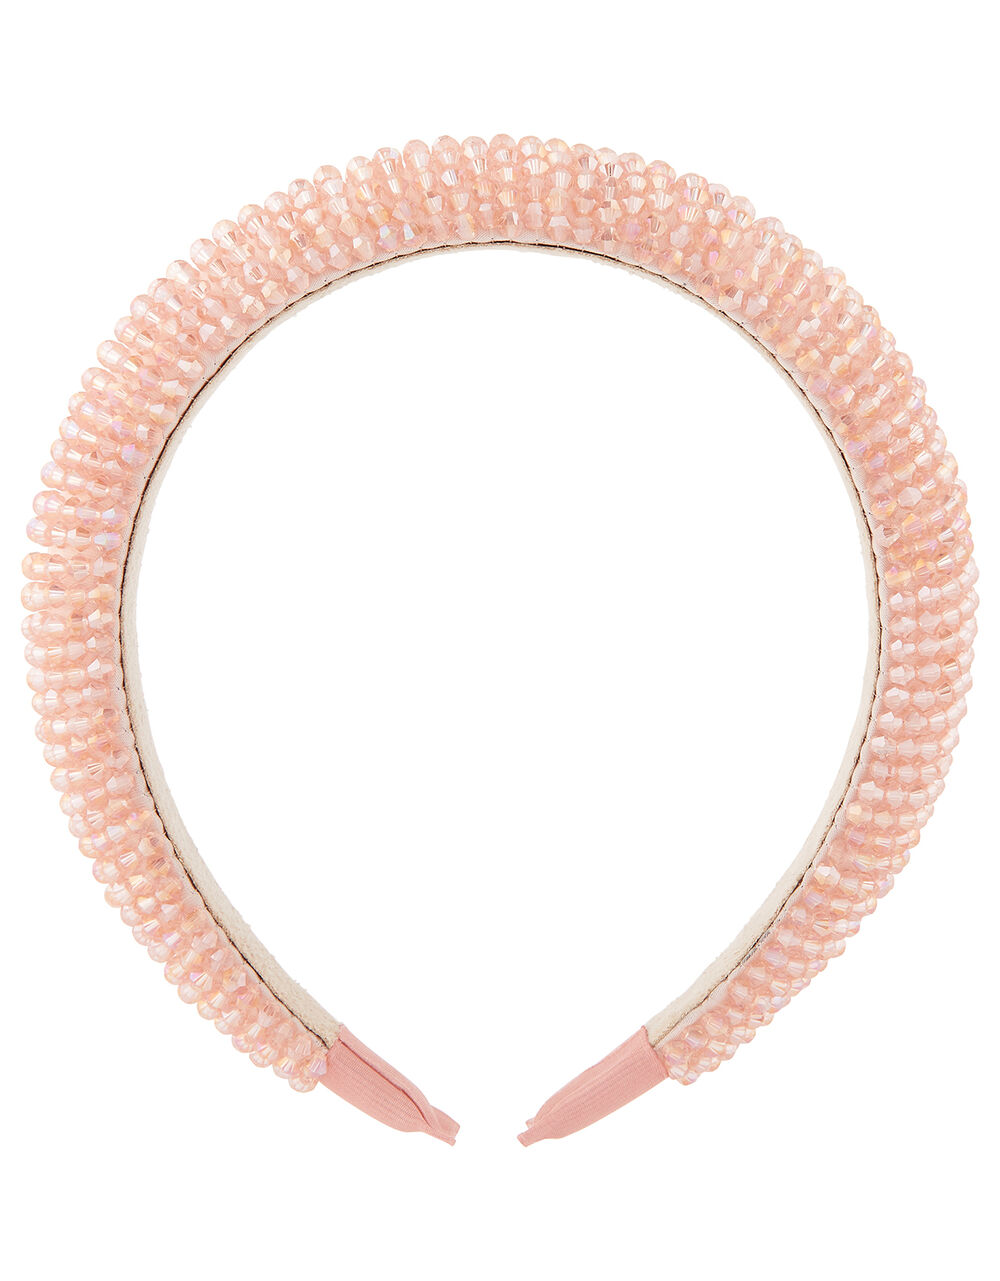 Pretty Crystal Bead Headband Pink | Hair bands & Scrunchies ...